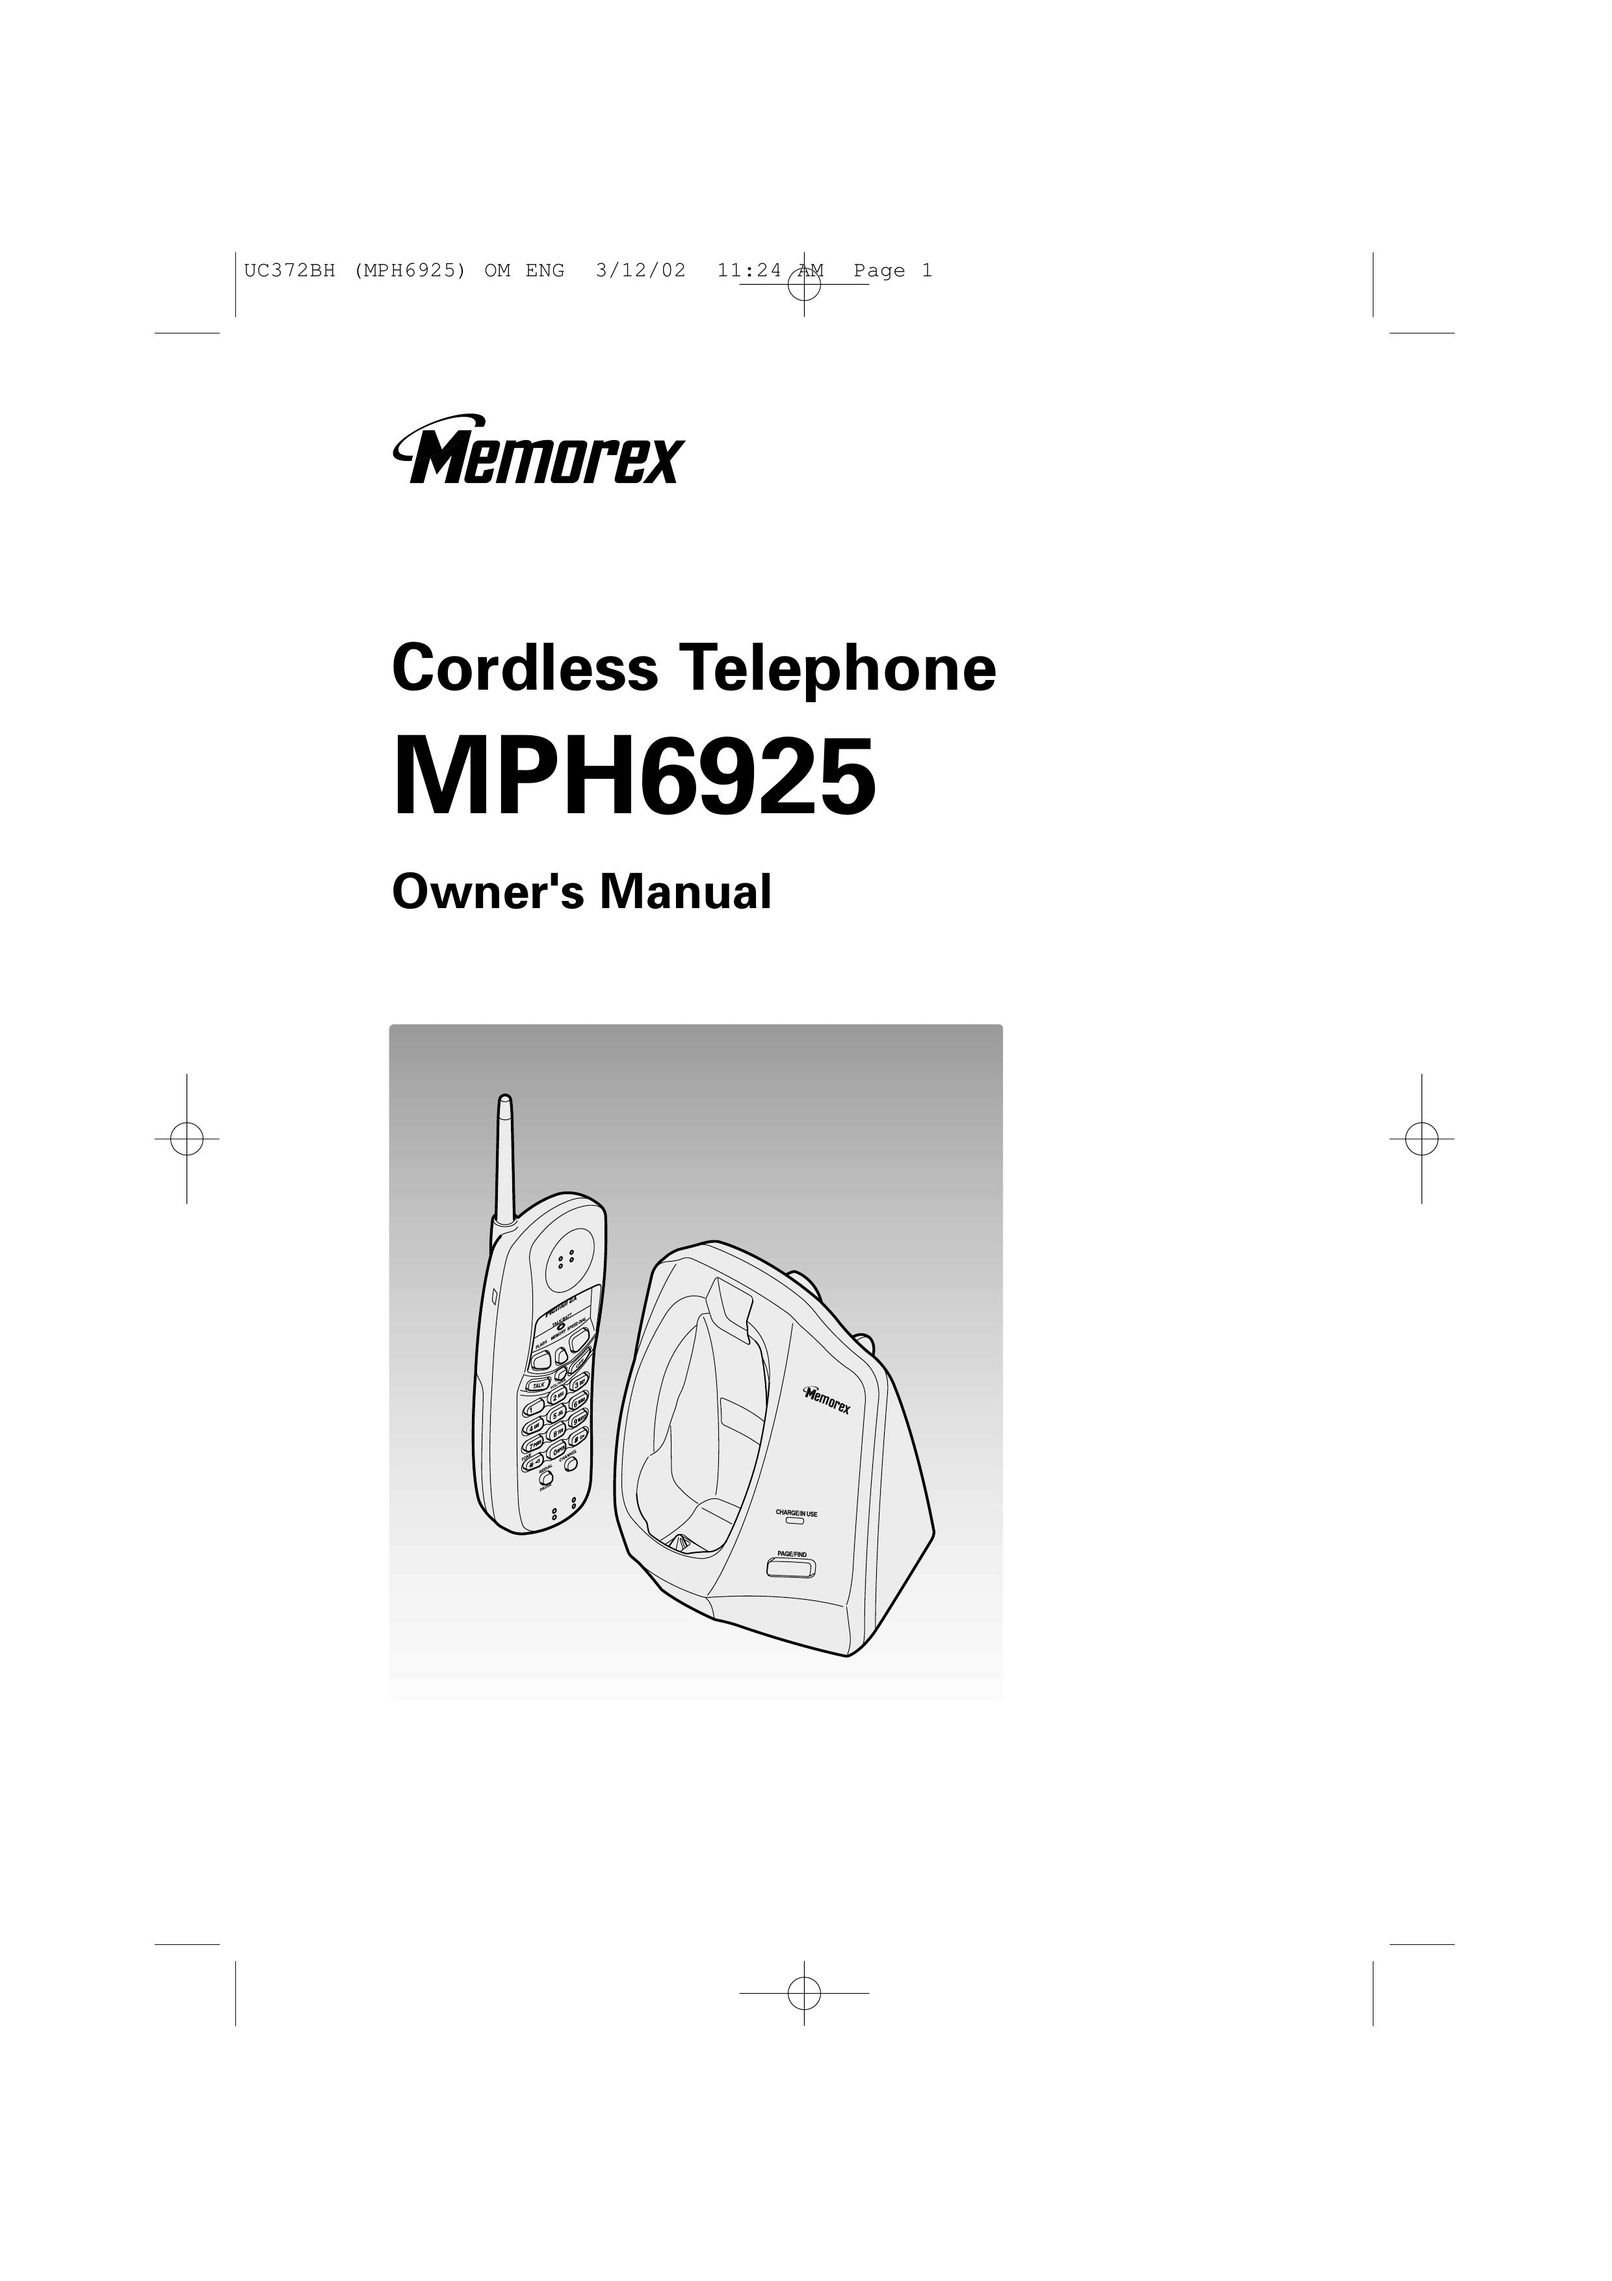 Memorex MPH6925 Cordless Telephone User Manual